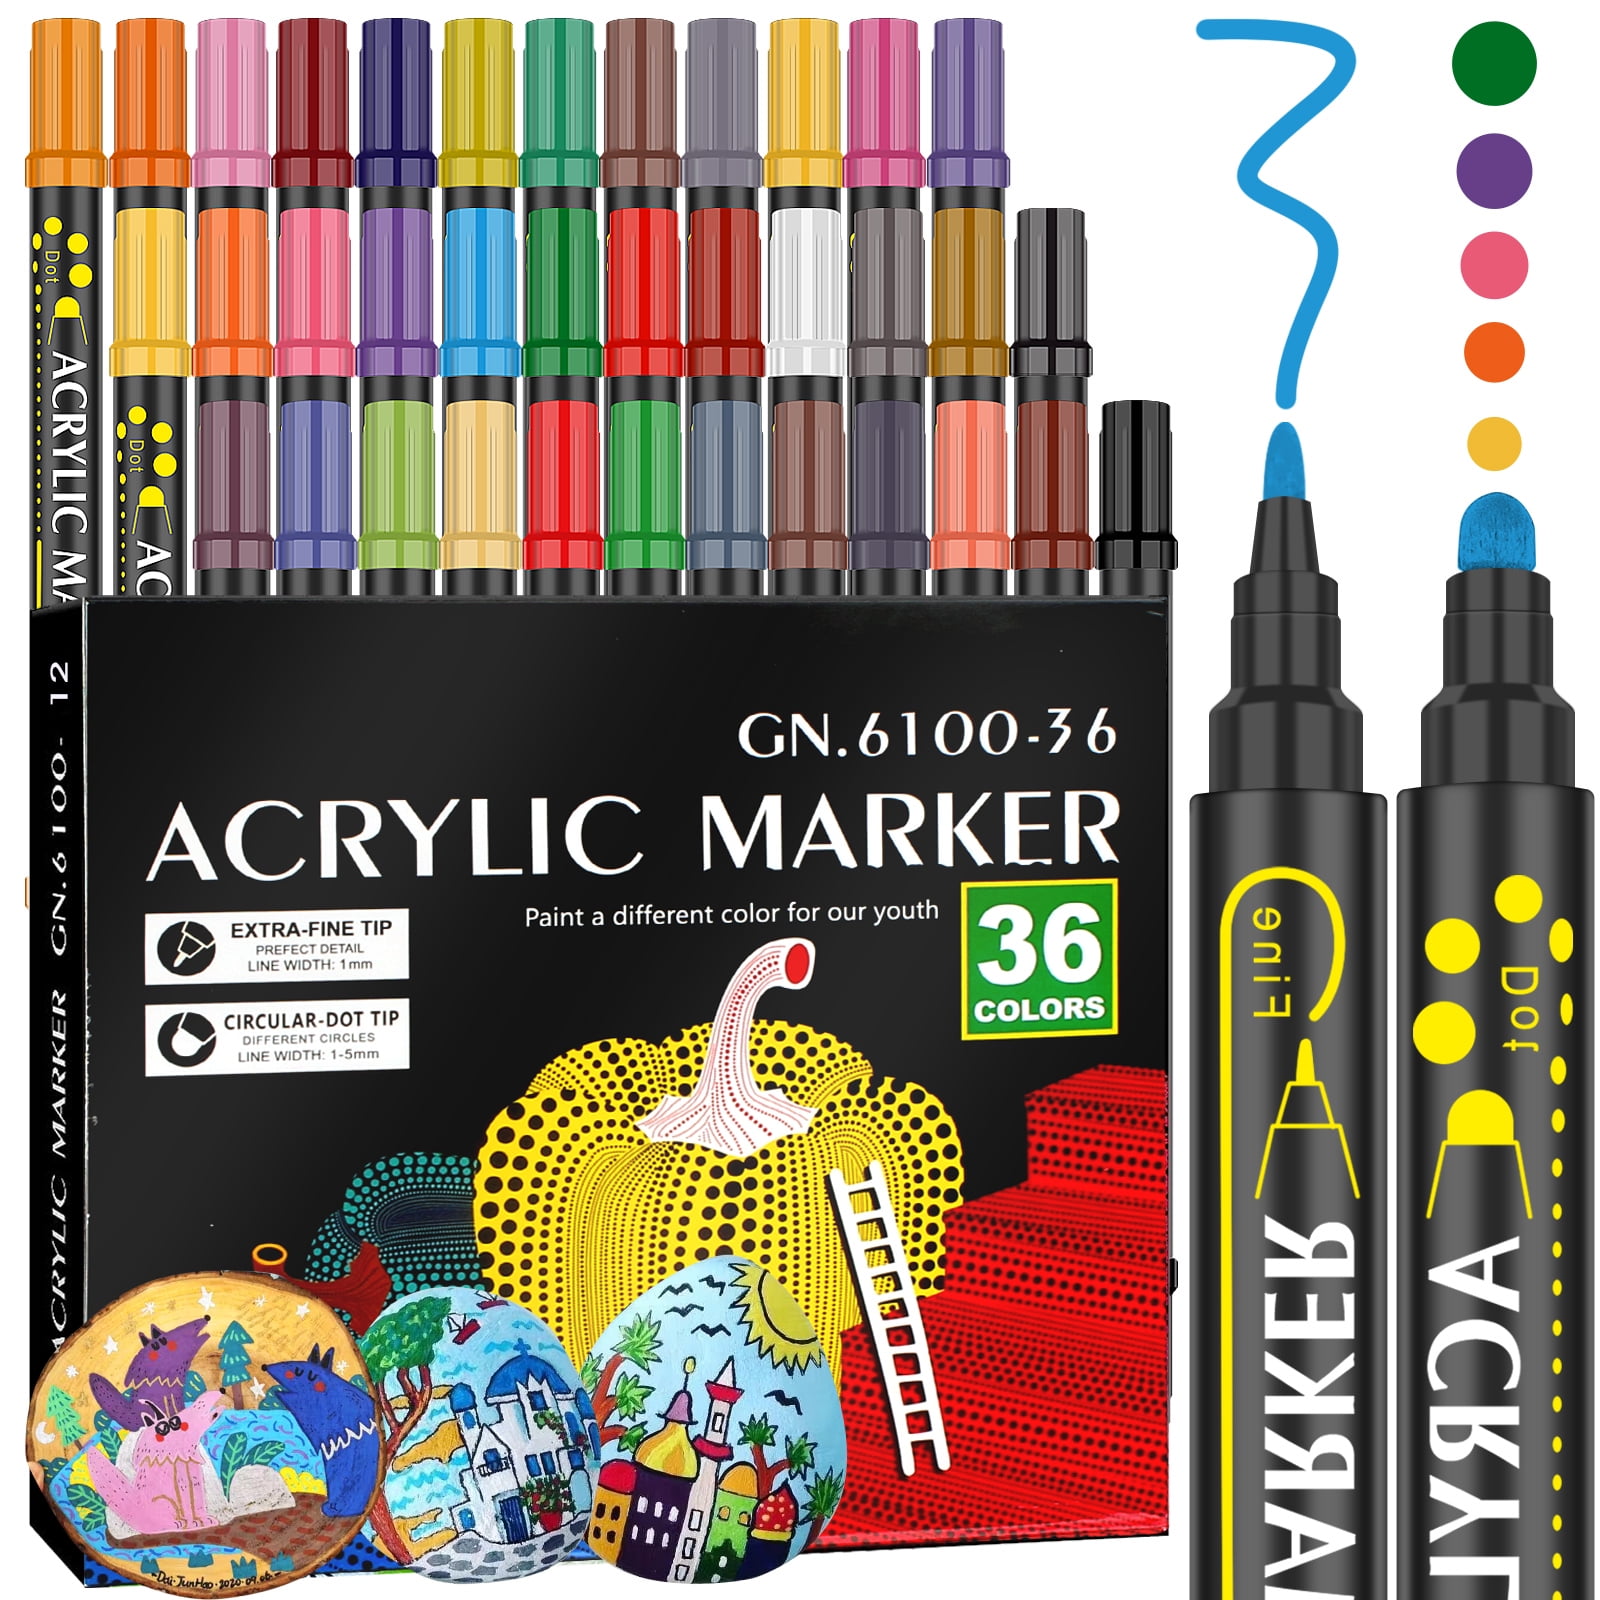 ZEYAR Dual Tip Acrylic Paint Pen Metallic Colors, Board and Extra